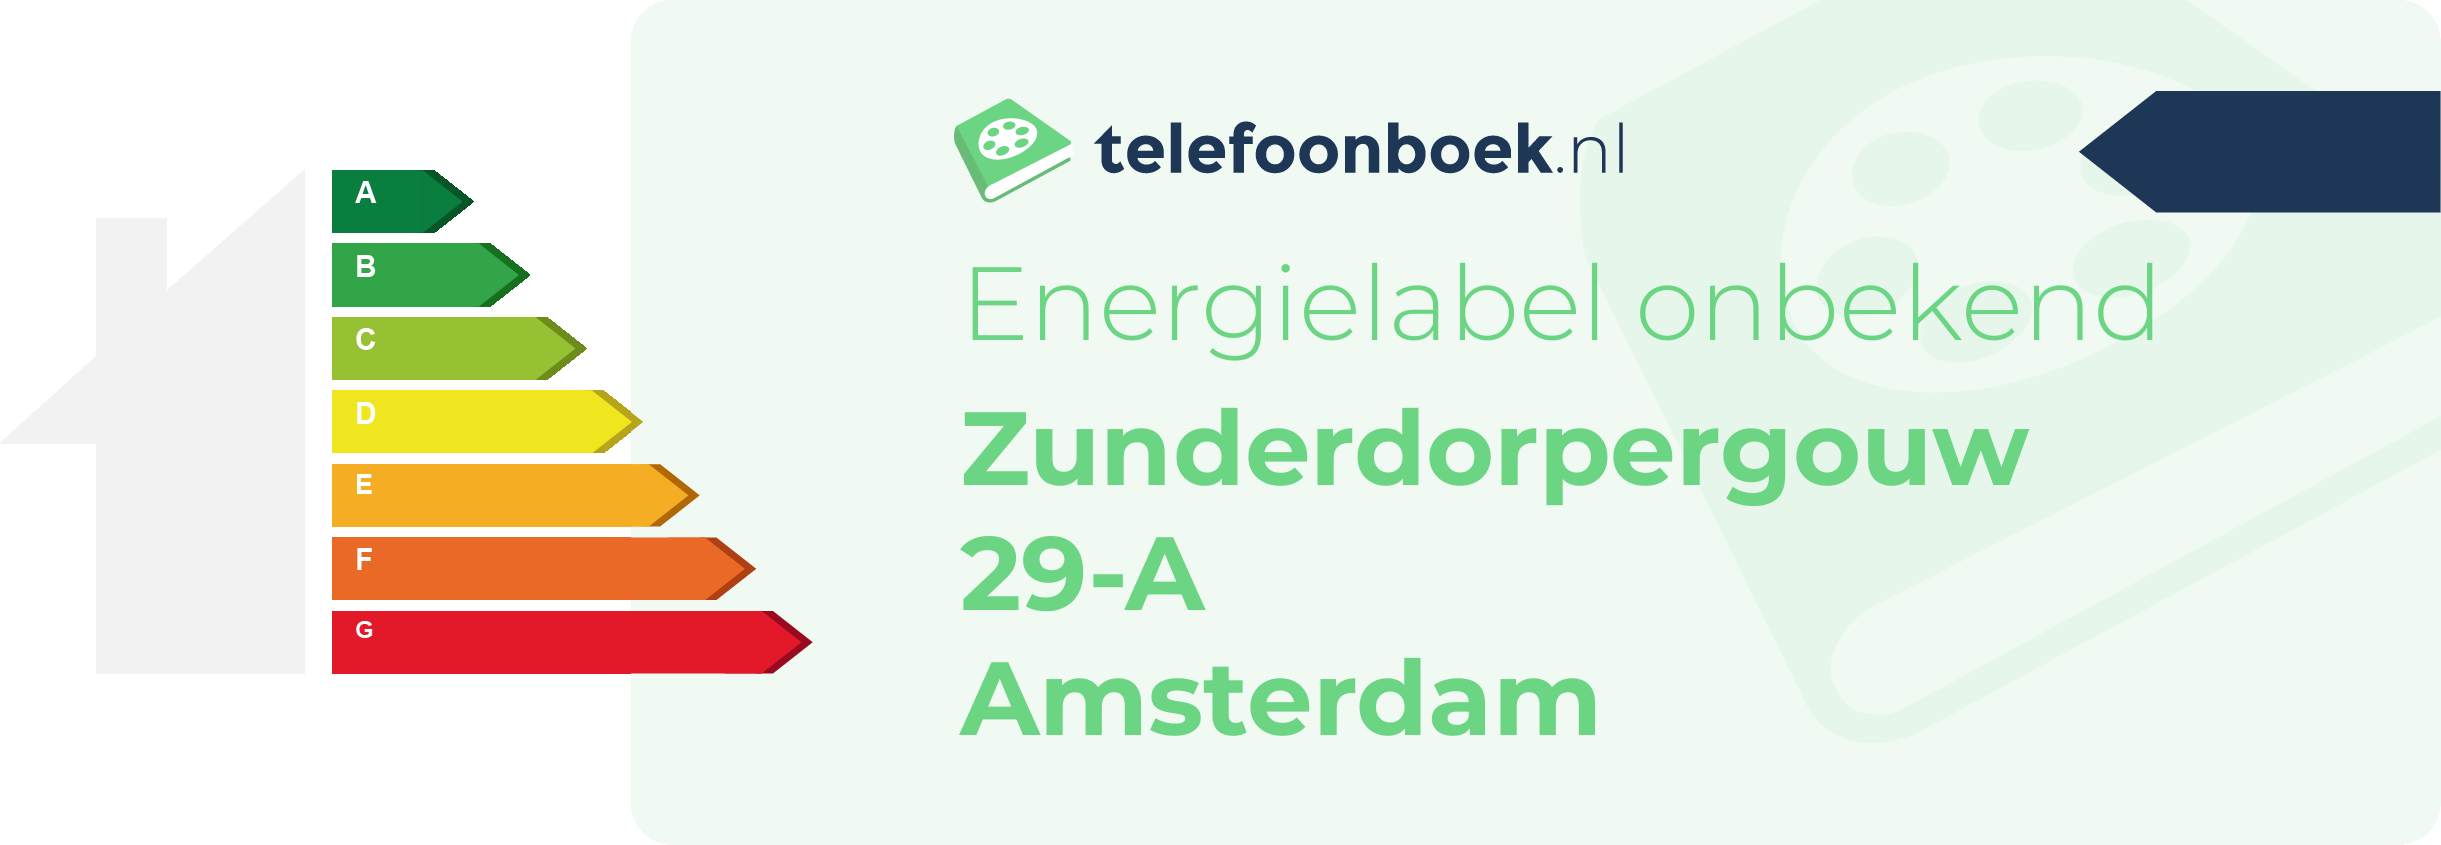 Energielabel Zunderdorpergouw 29-A Amsterdam